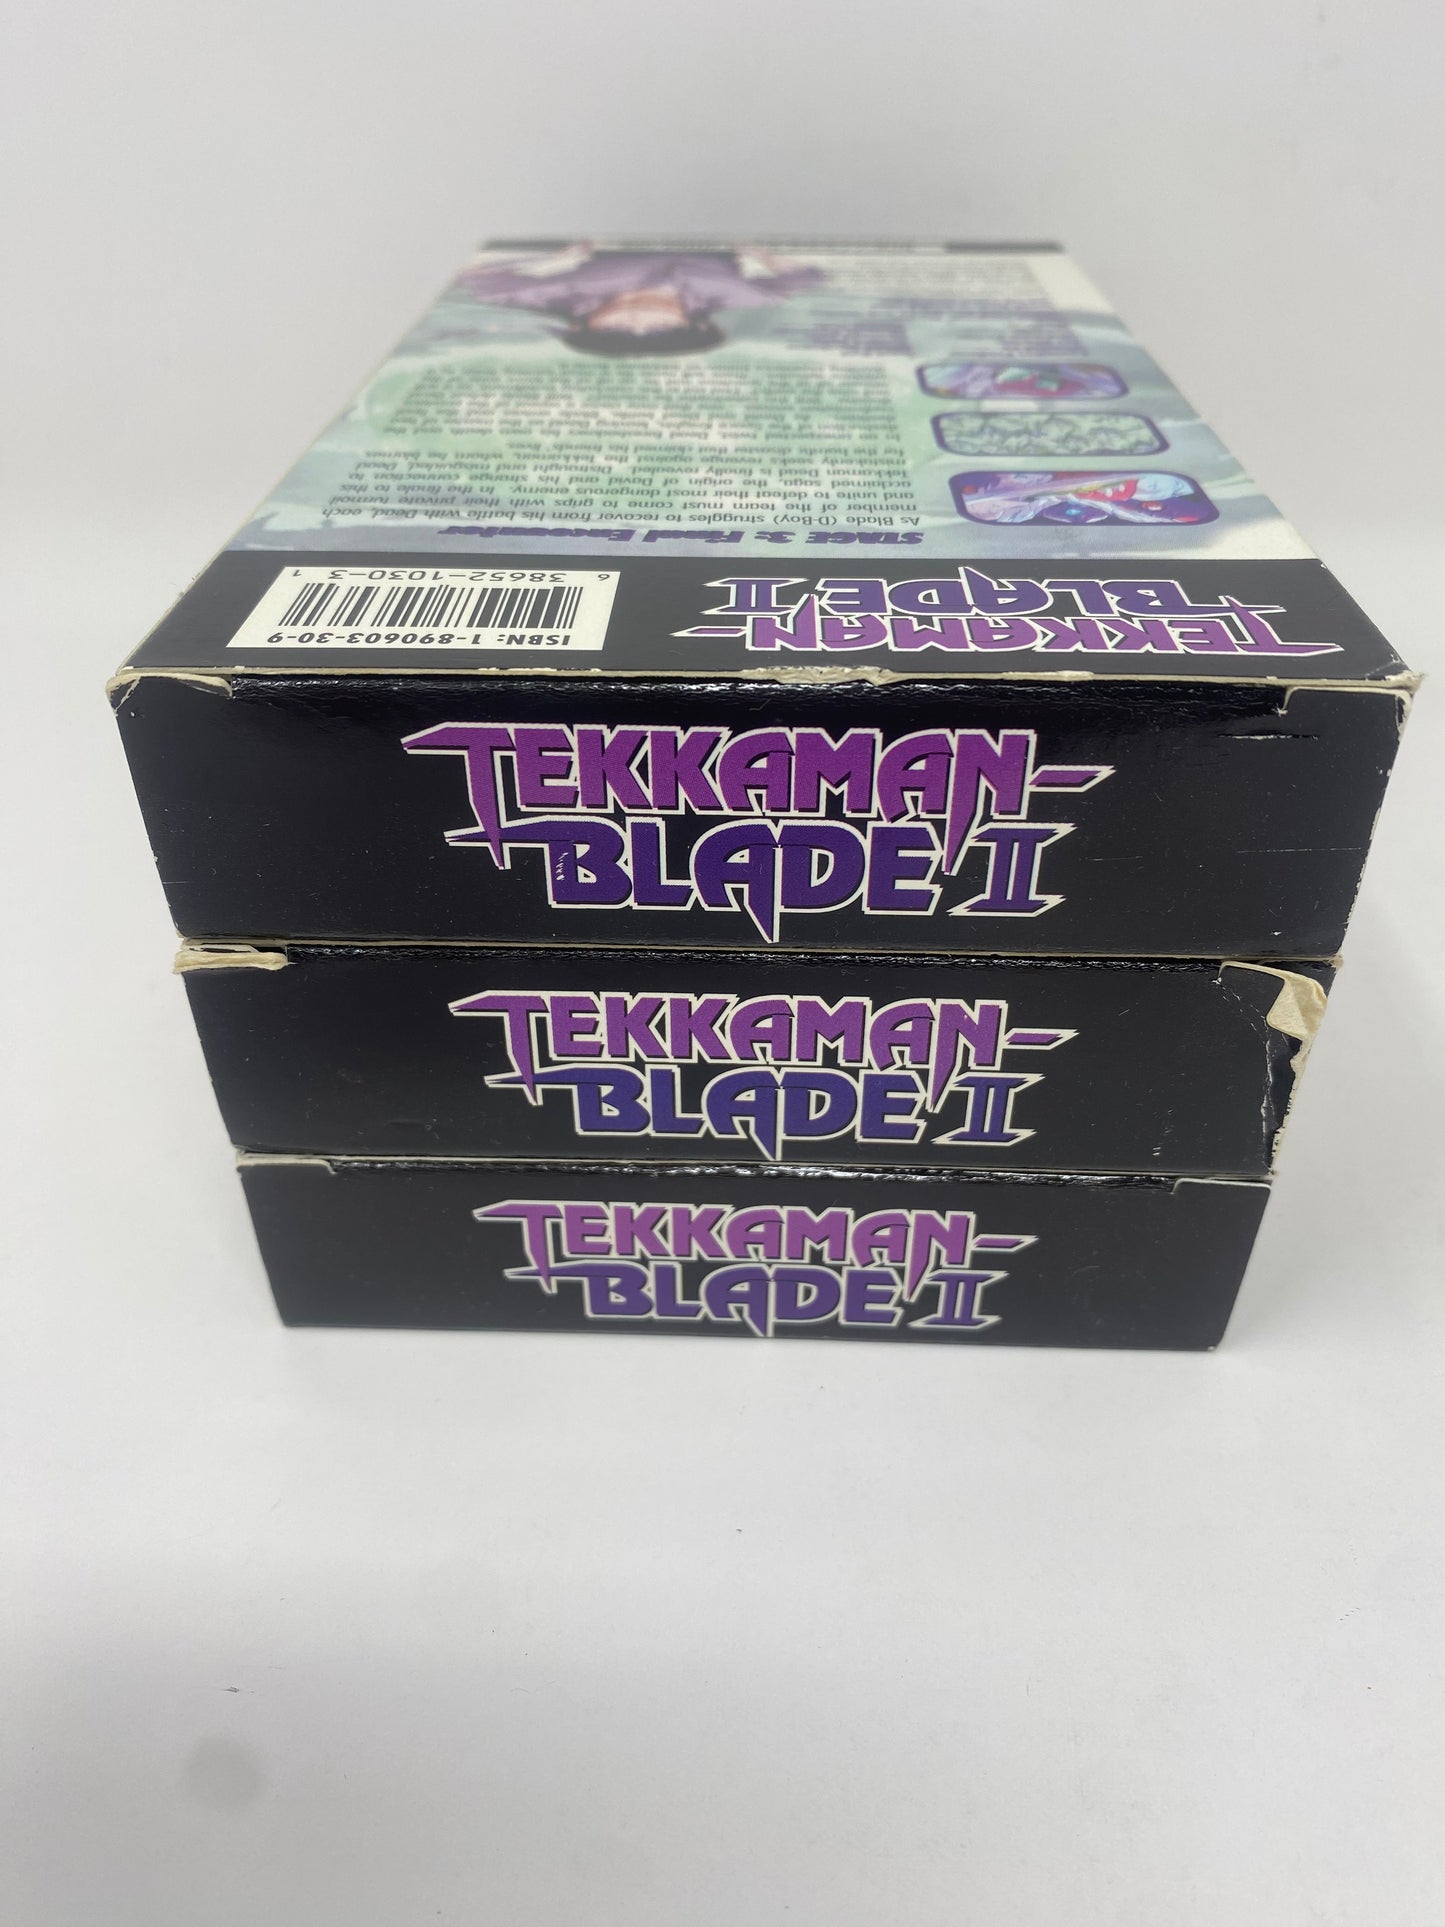 Tekkaman Blade II Stages 1-3 Vintage Anime Manga VHS Set - Complete Set - Urban Vision (1998)